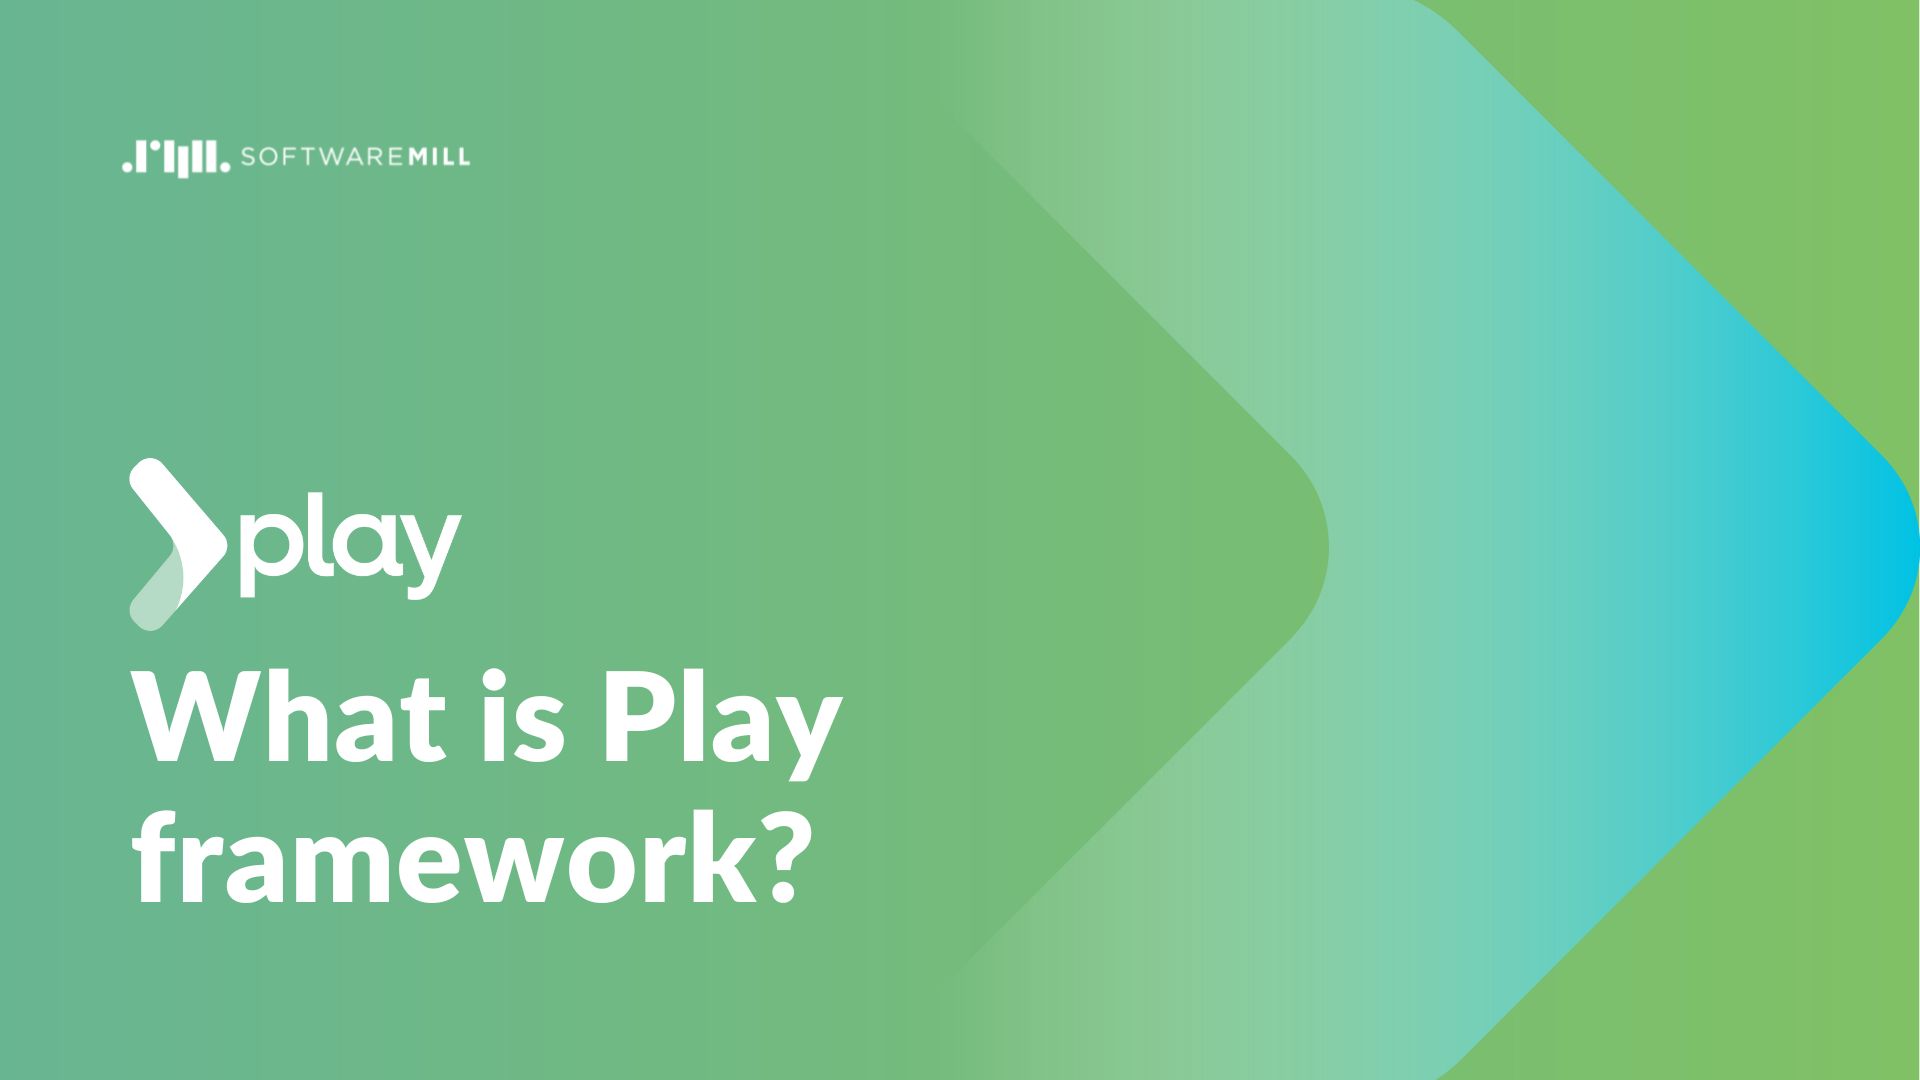 What is Play framework? webp image